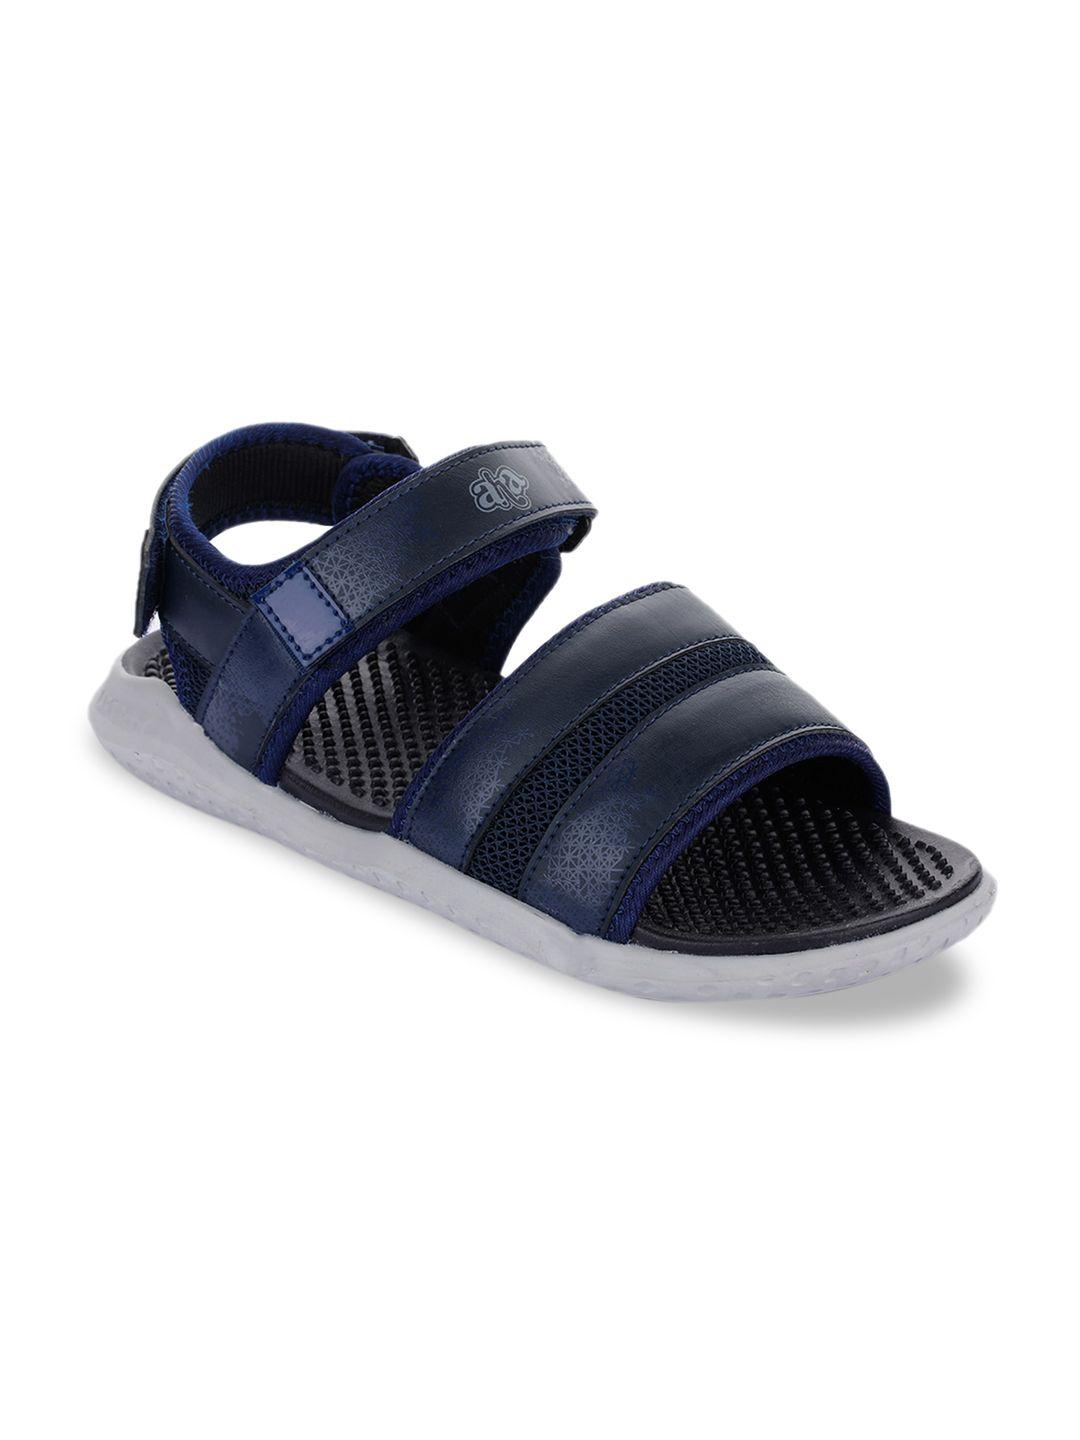 liberty men navy blue solid sports sandals